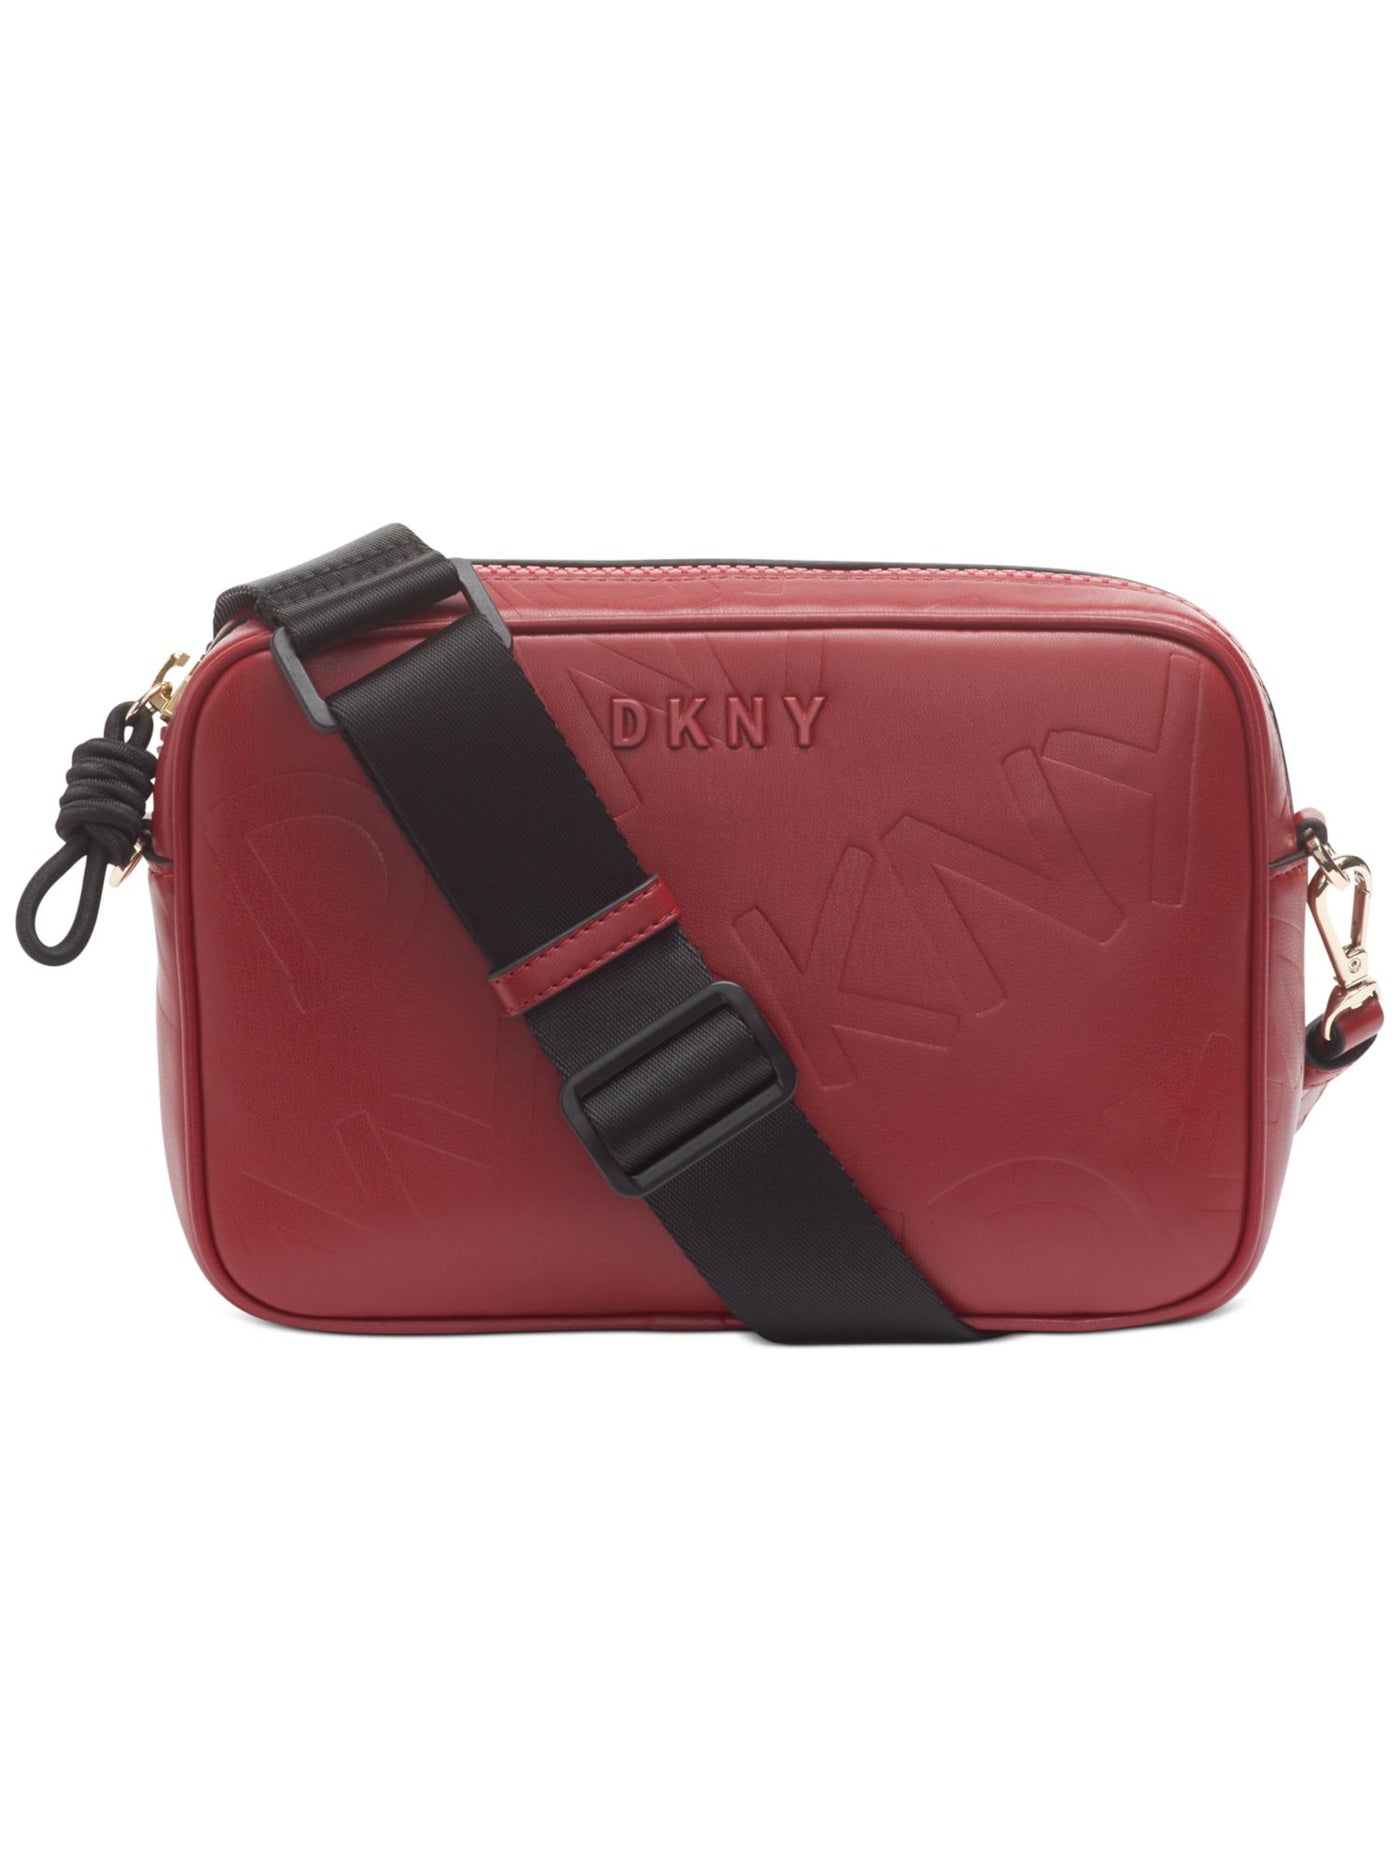 DKNY Women's Red Printed Faux Leather Adjustable Strap Shoulder Bag